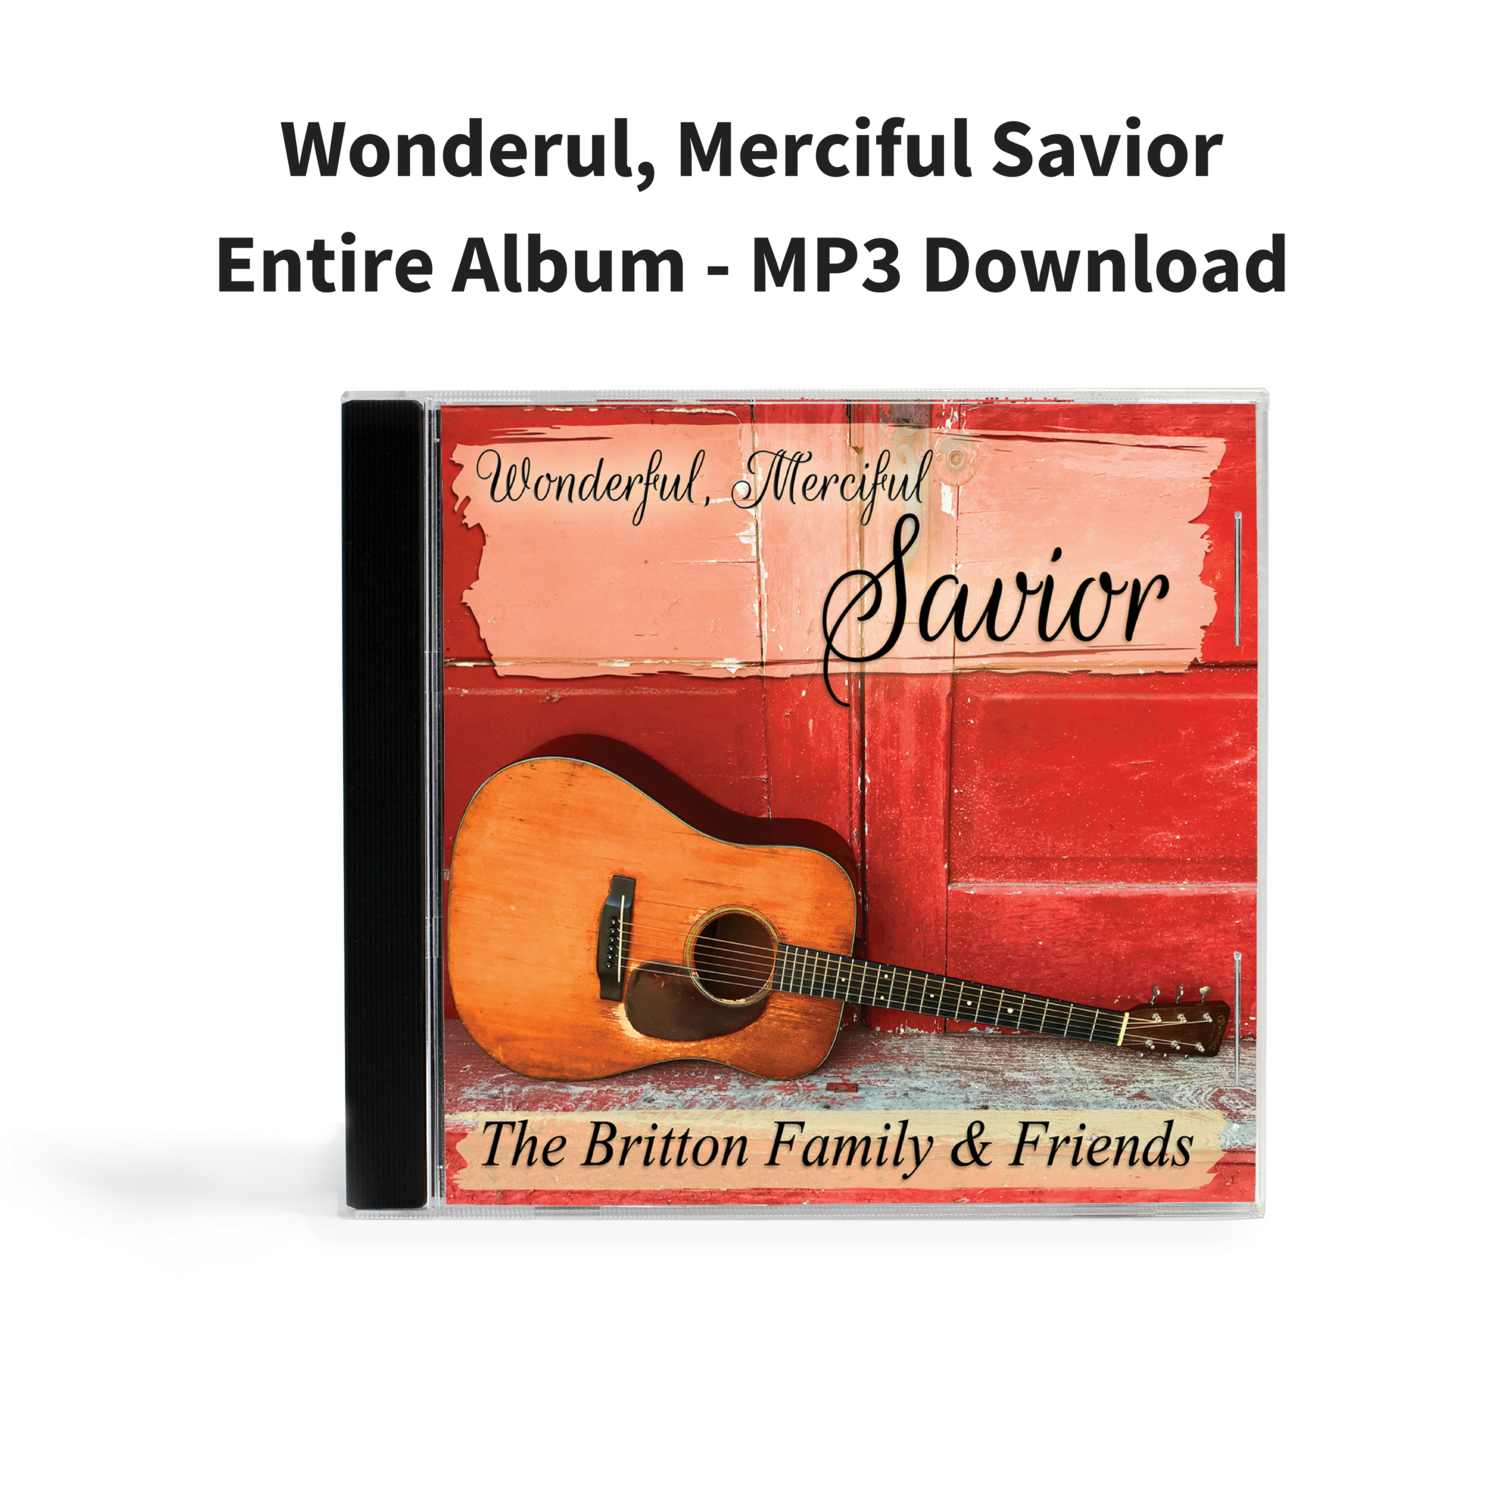 Wonderfull, Merciful Savior - Entire Album MP3 Download